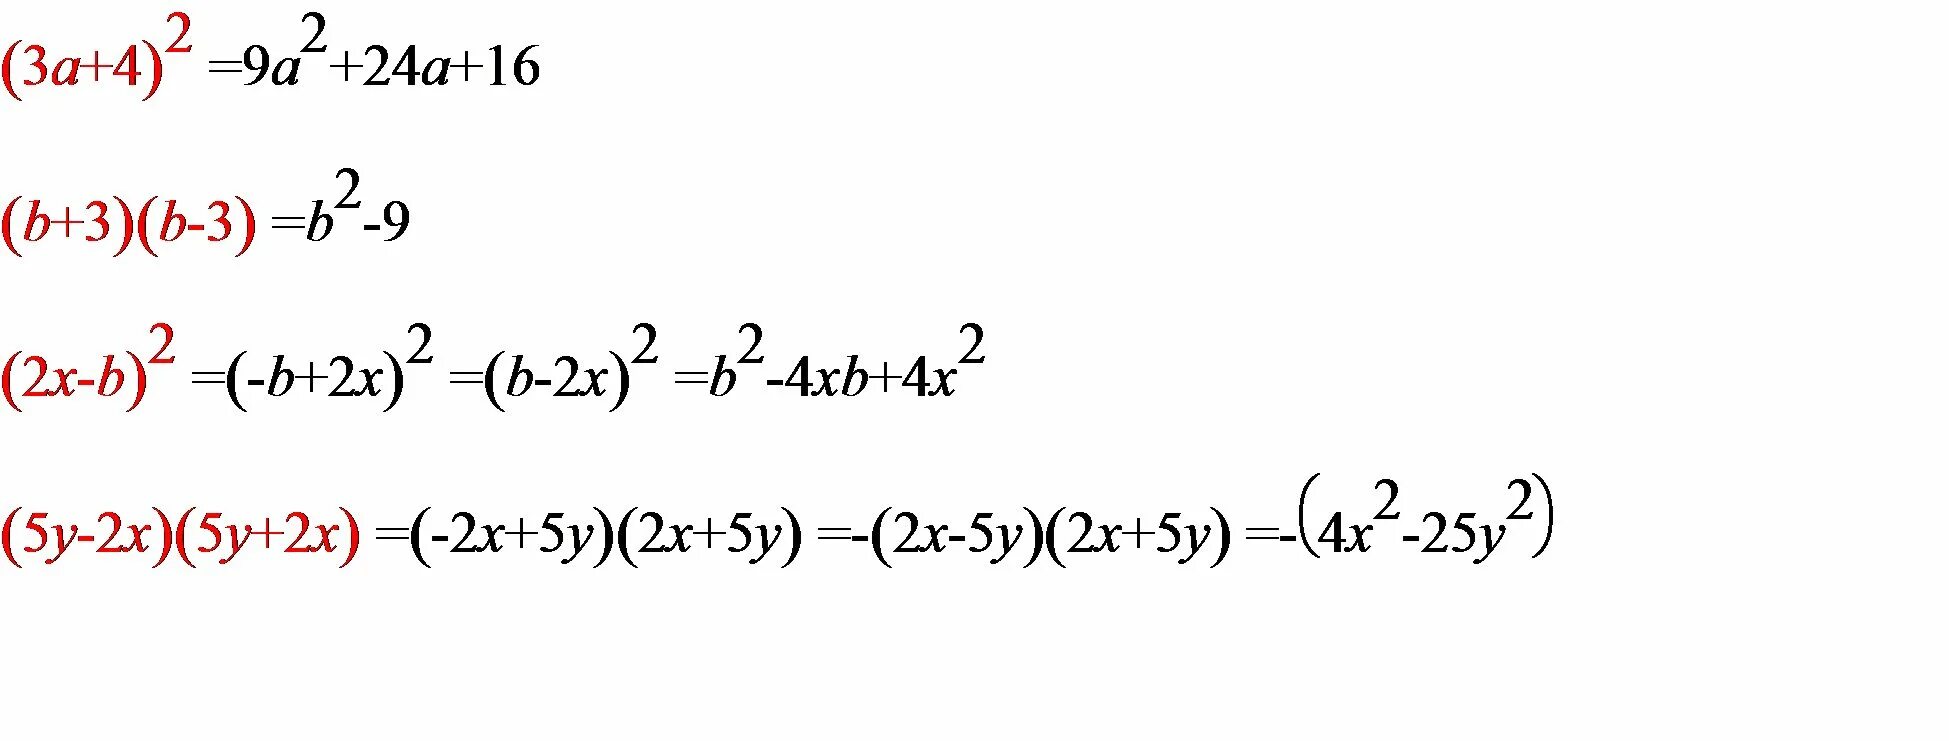 0.7 5 6. Преобразуйте в многочлен b+3 b-3. (X-Y)^2(X+Y) преобразование в многочлен. Преобразуйте выражение в многочлен.